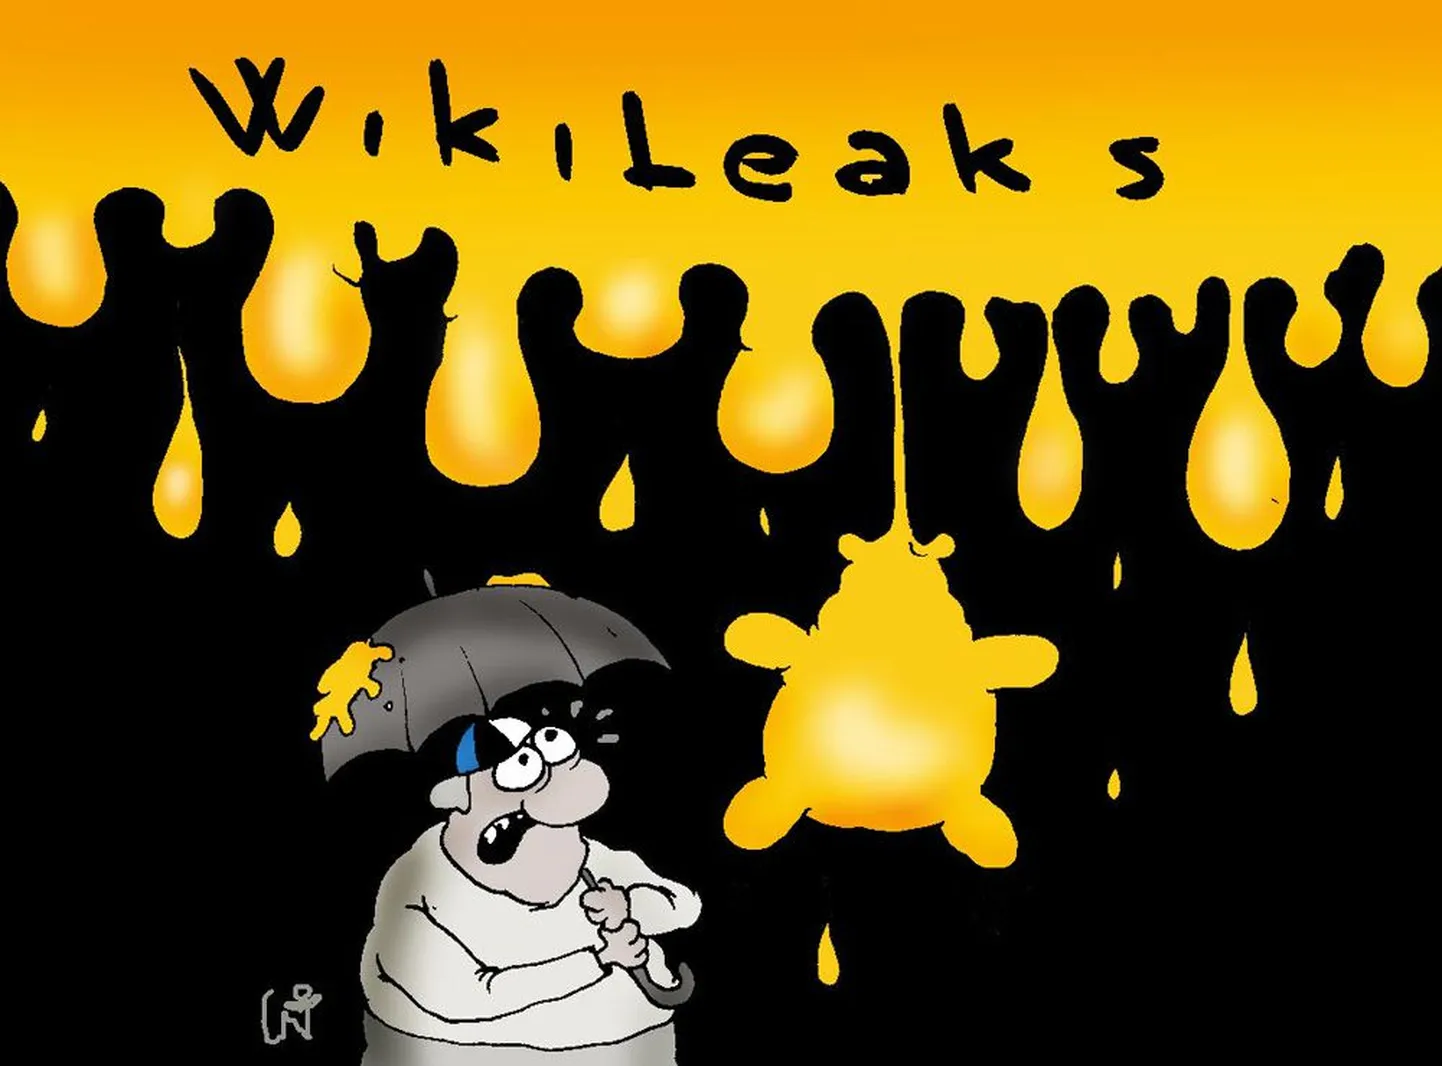 Карикатура Postimees на тему утечки данных, опубликованных WikiLeaks.